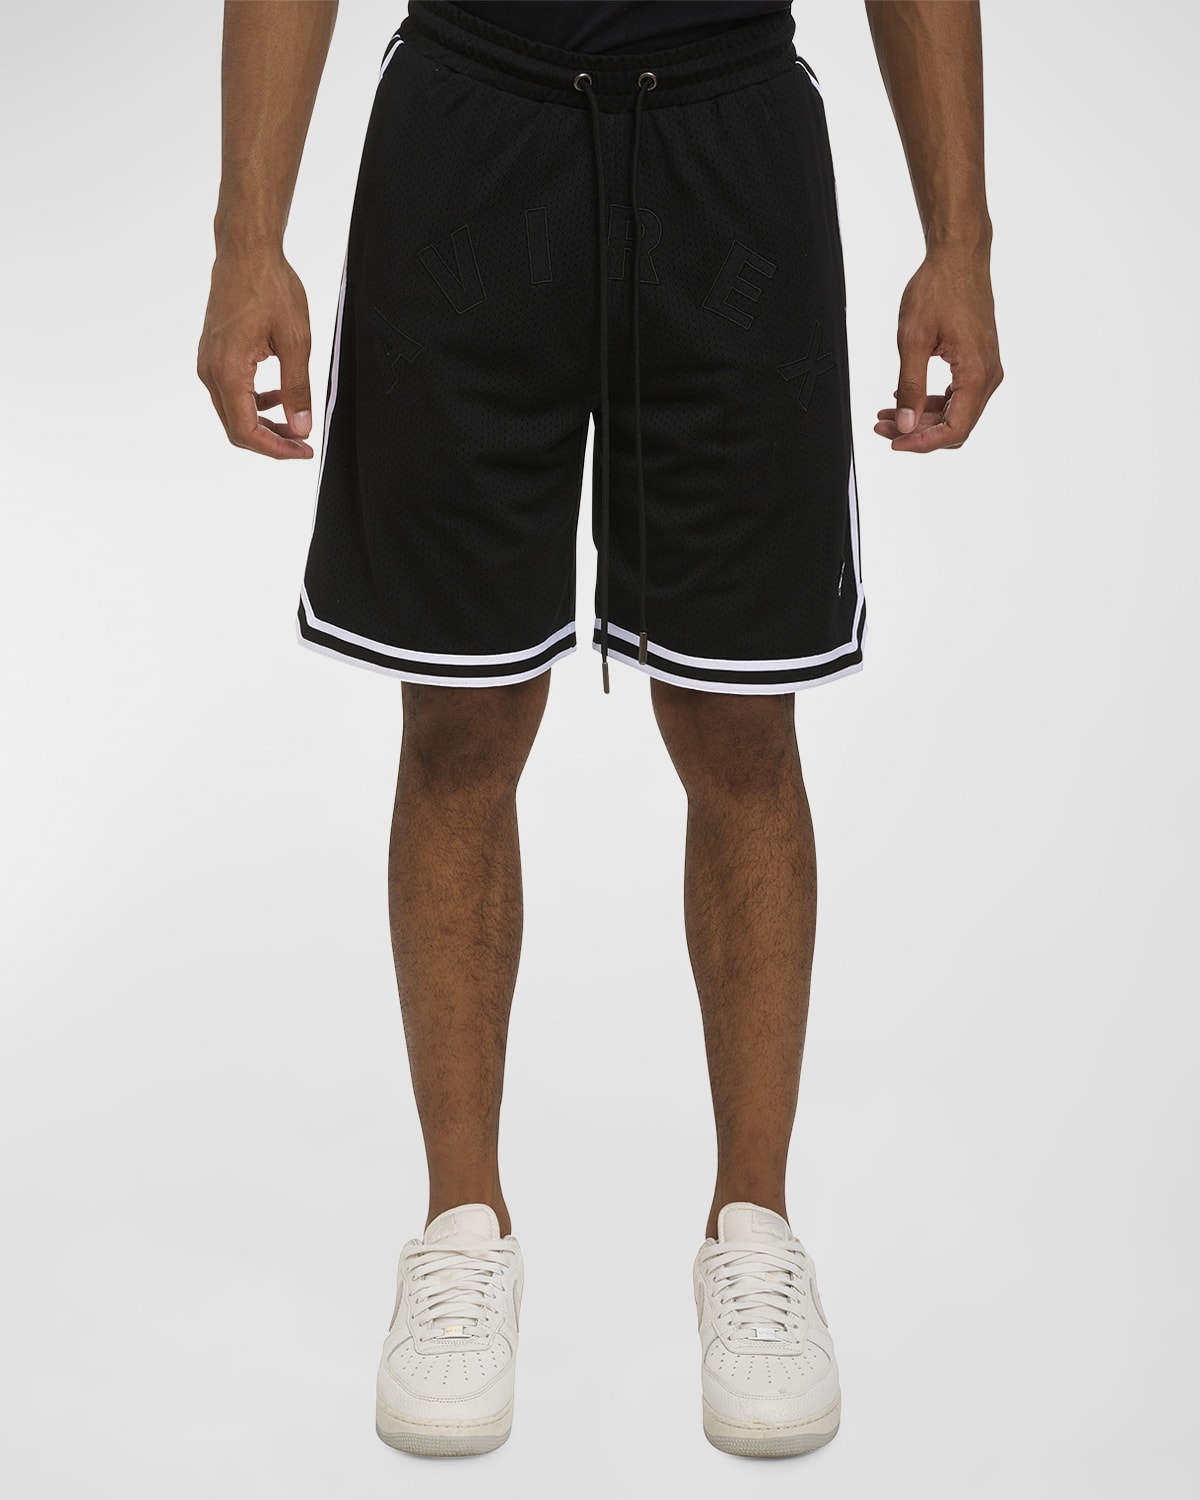 AVIREX Men's Icon Mesh Basketball Shorts